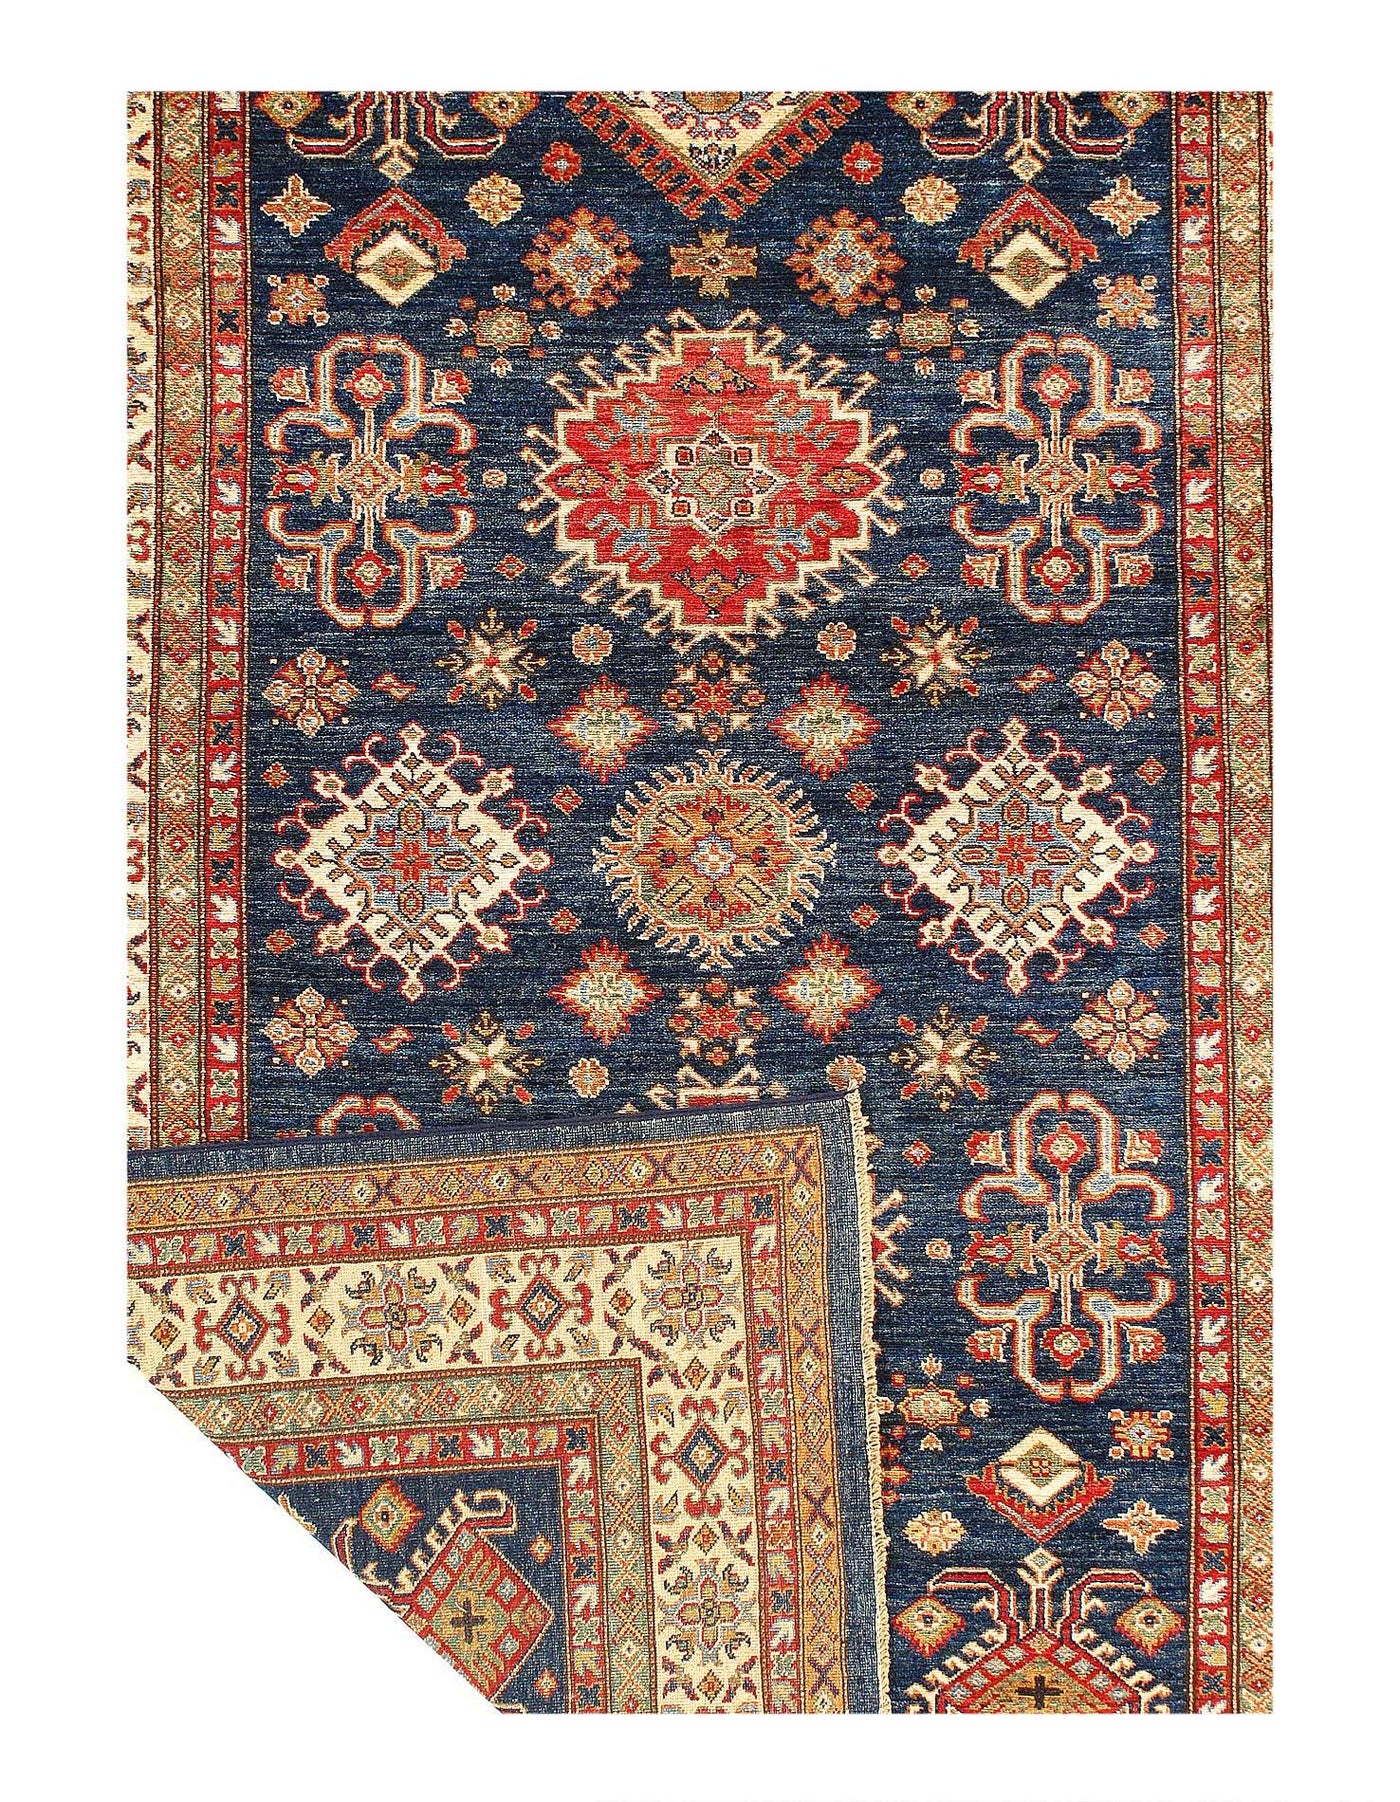 Canvello Navy blue Super Kazak Lamb's Wool rug - 5'5" X 8'6" - Canvello